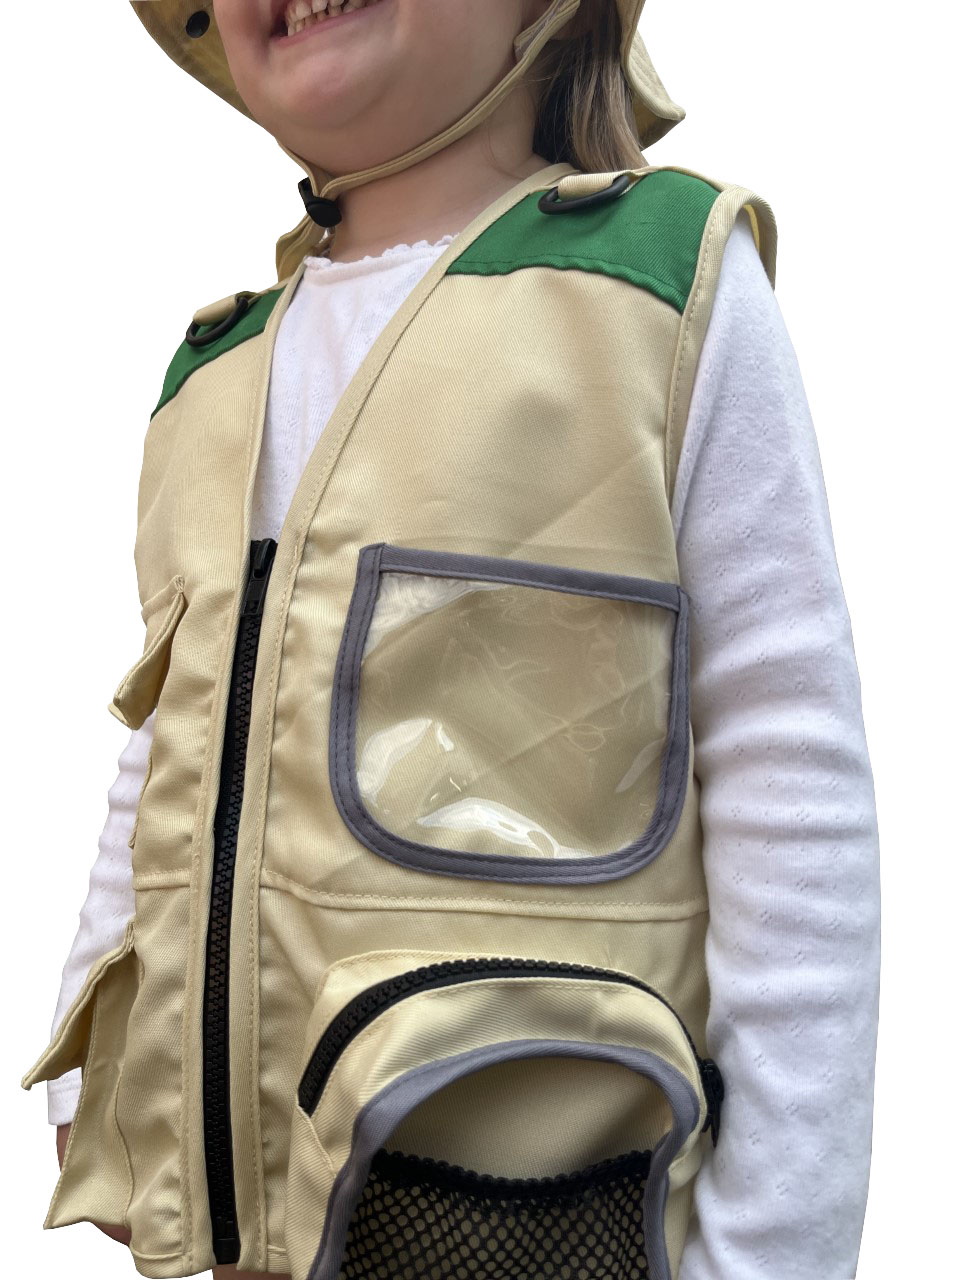 Quickdraw Kids Explorer Outfit Safari Vest & Hat Outdoor Adventurer Costume Girls Boys Ages 3-7